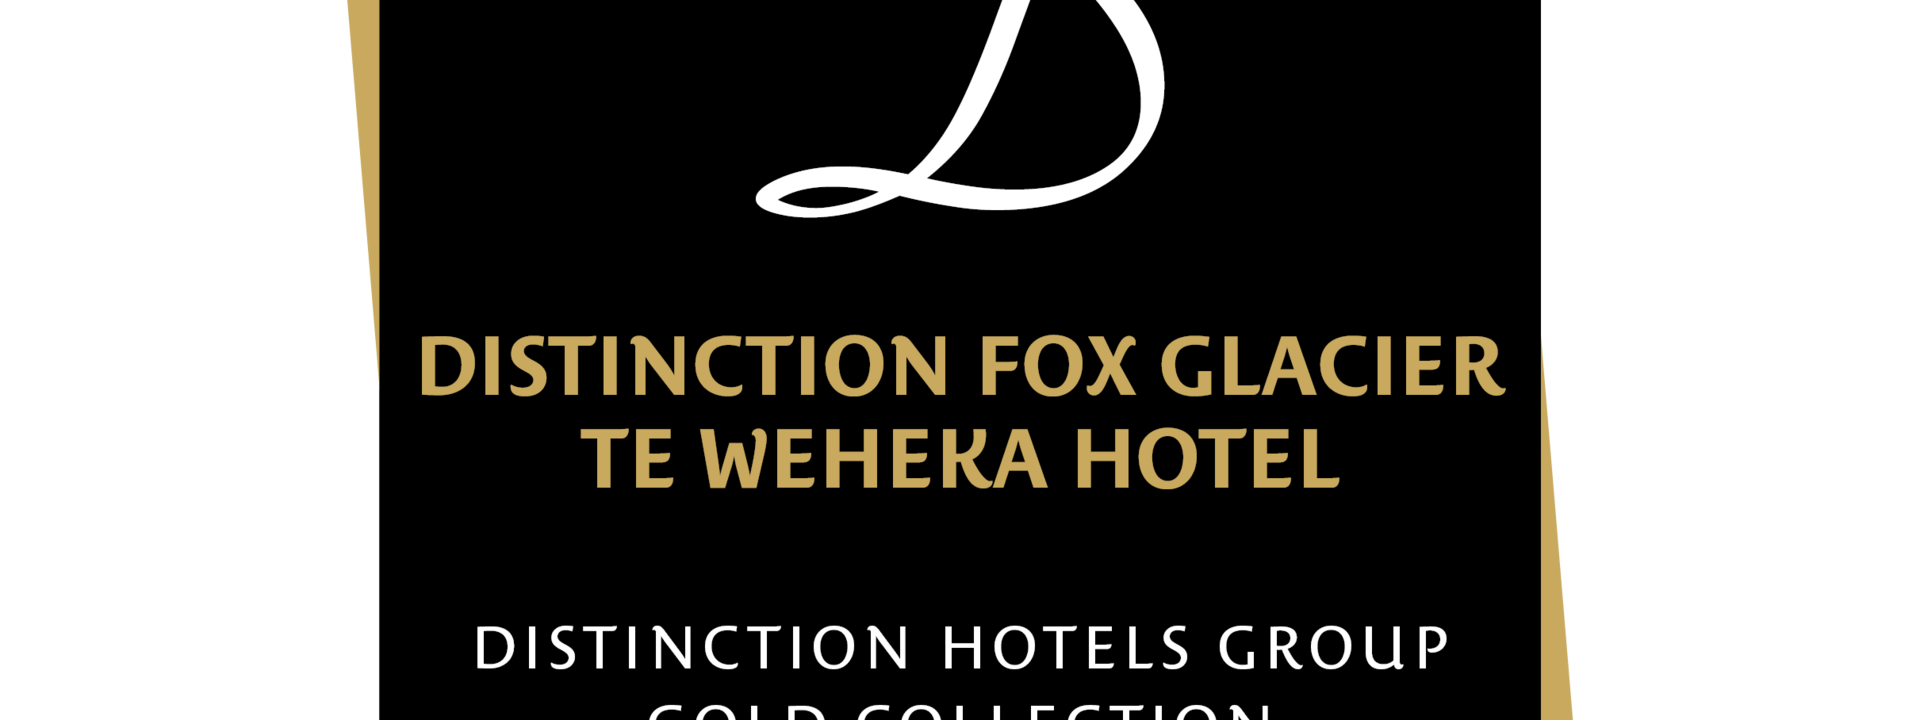 Distinction Fox Glacier Te Weheka Hotel logo4 PNG.png